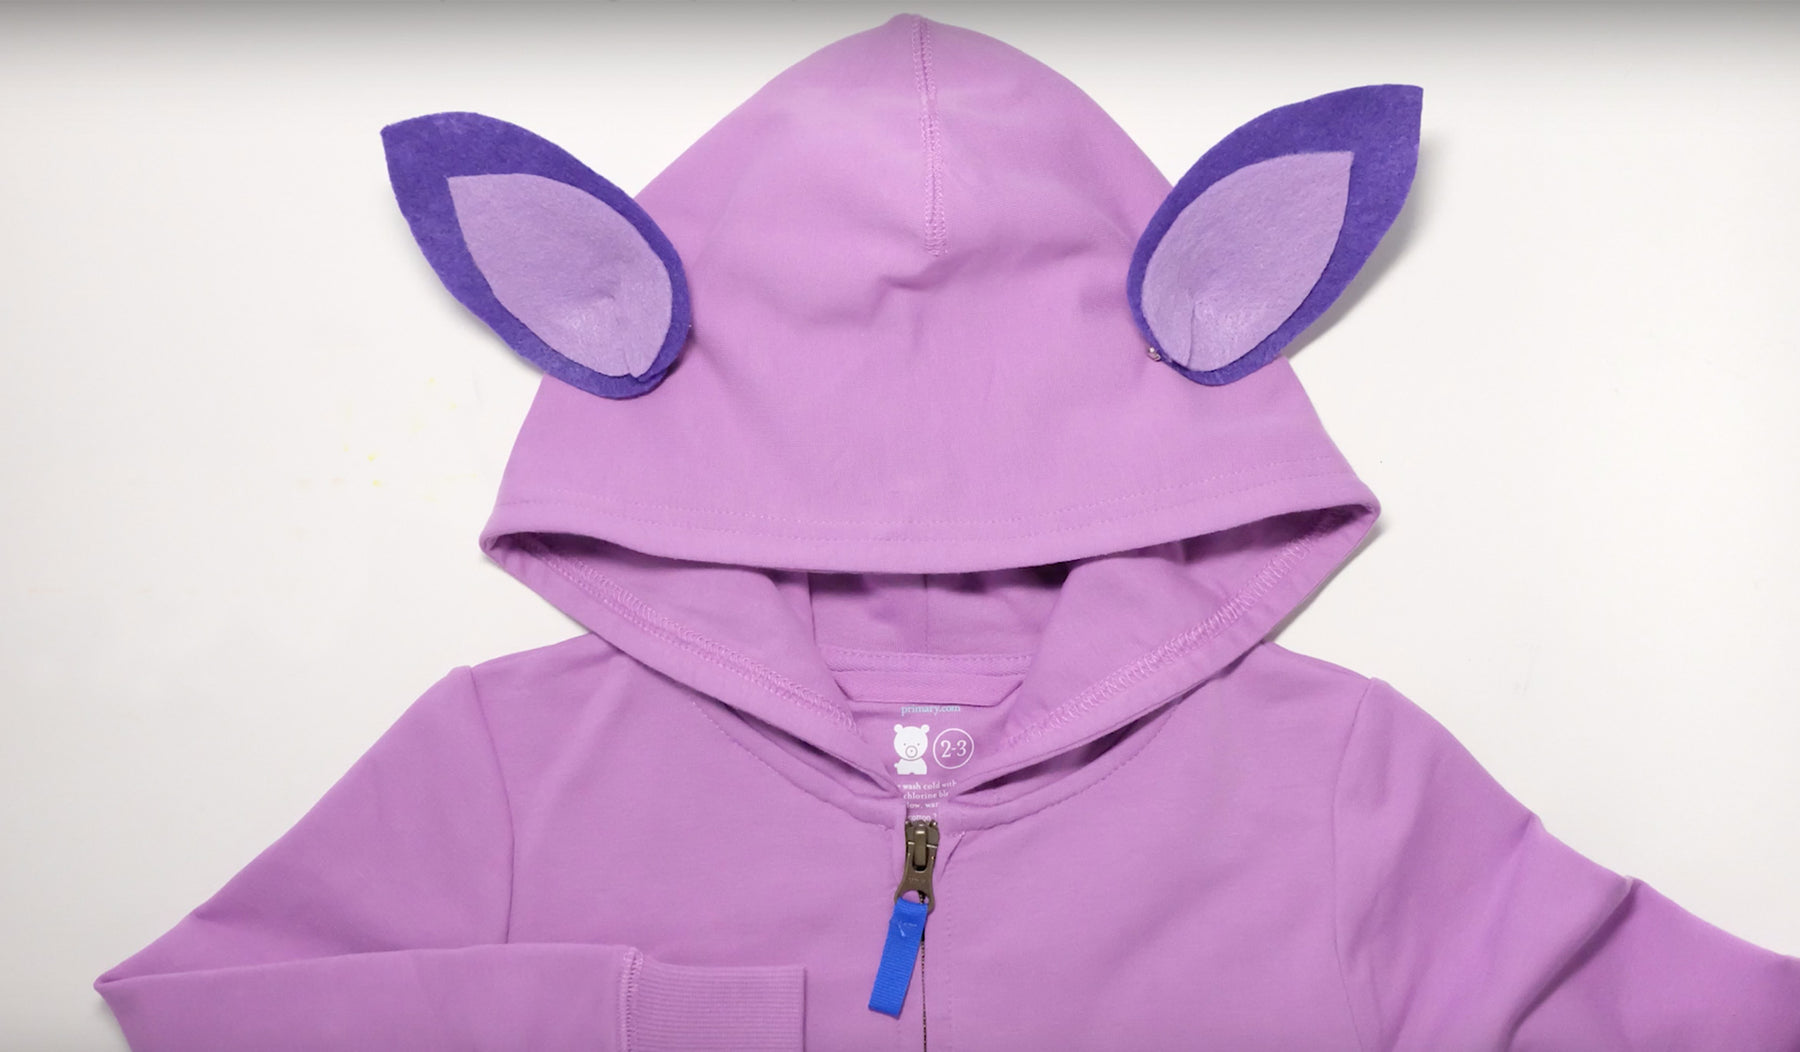 Purple hoodie sweatshirt with small animal ears glued onto the hood.